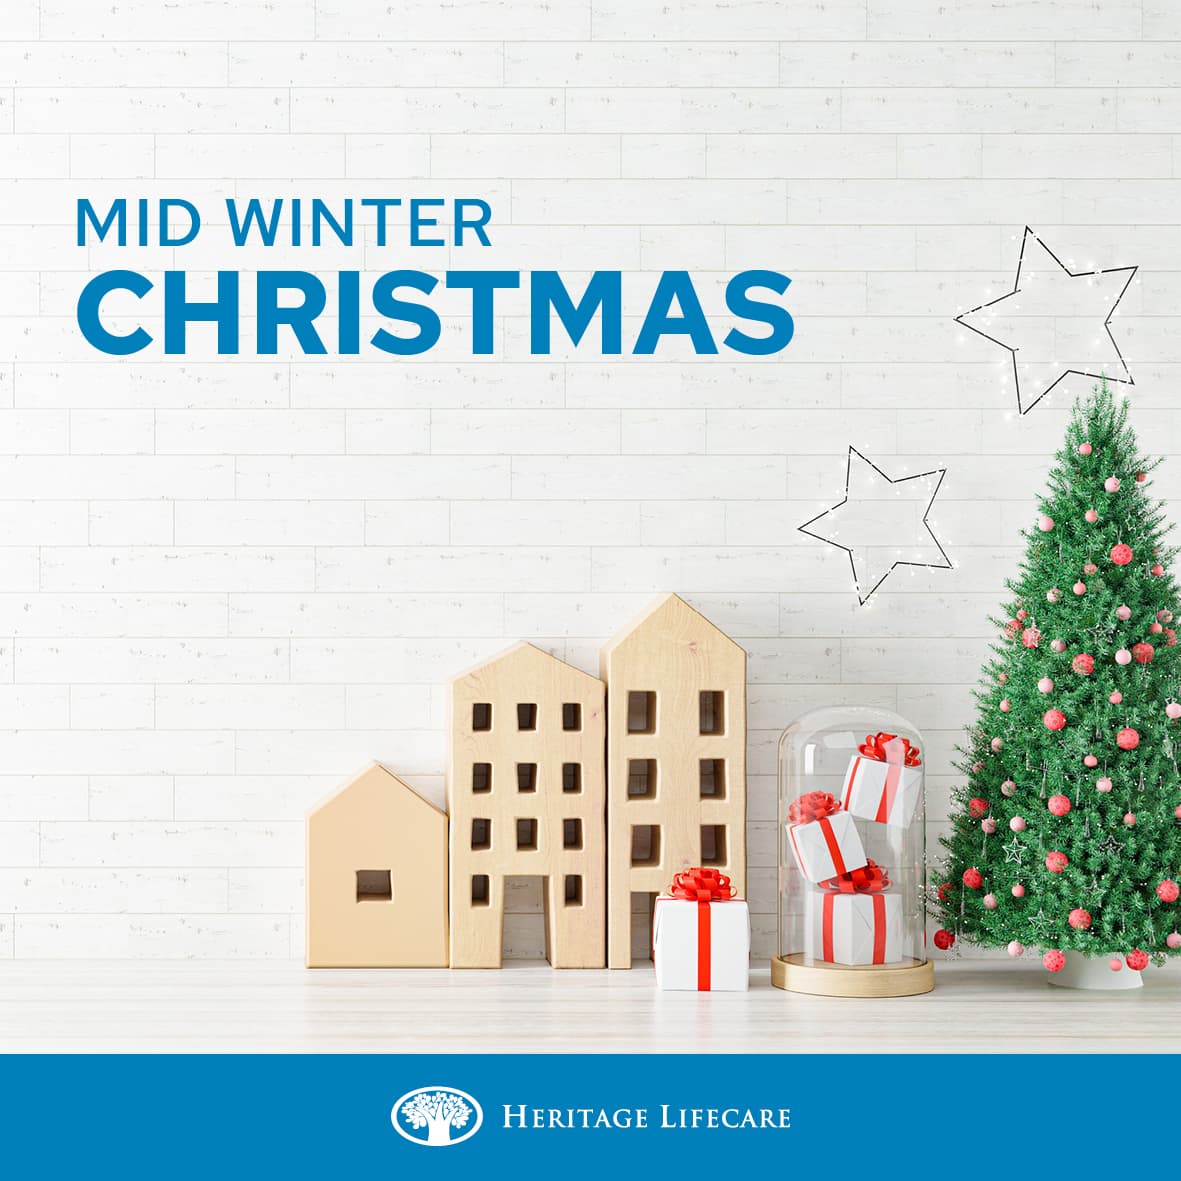 News & events • Mid Winter Christmas • Heritage Lifecare